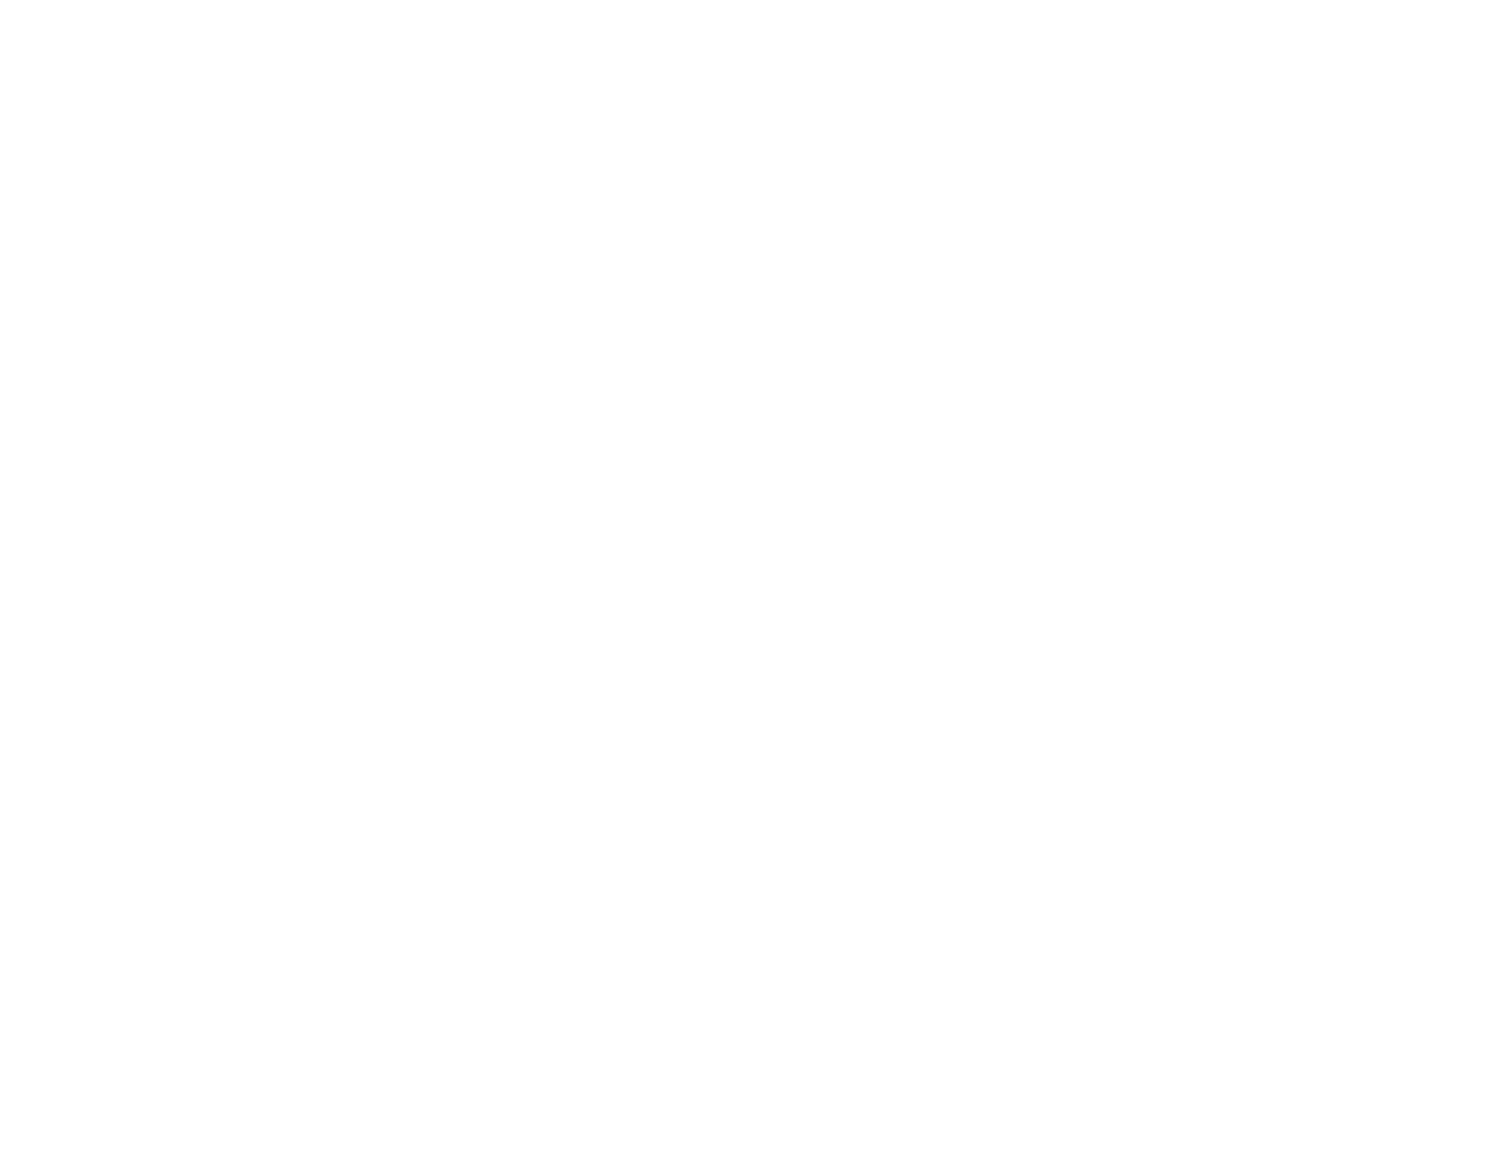 Taboola.com logo pour fonds sombres (PNG transparent)